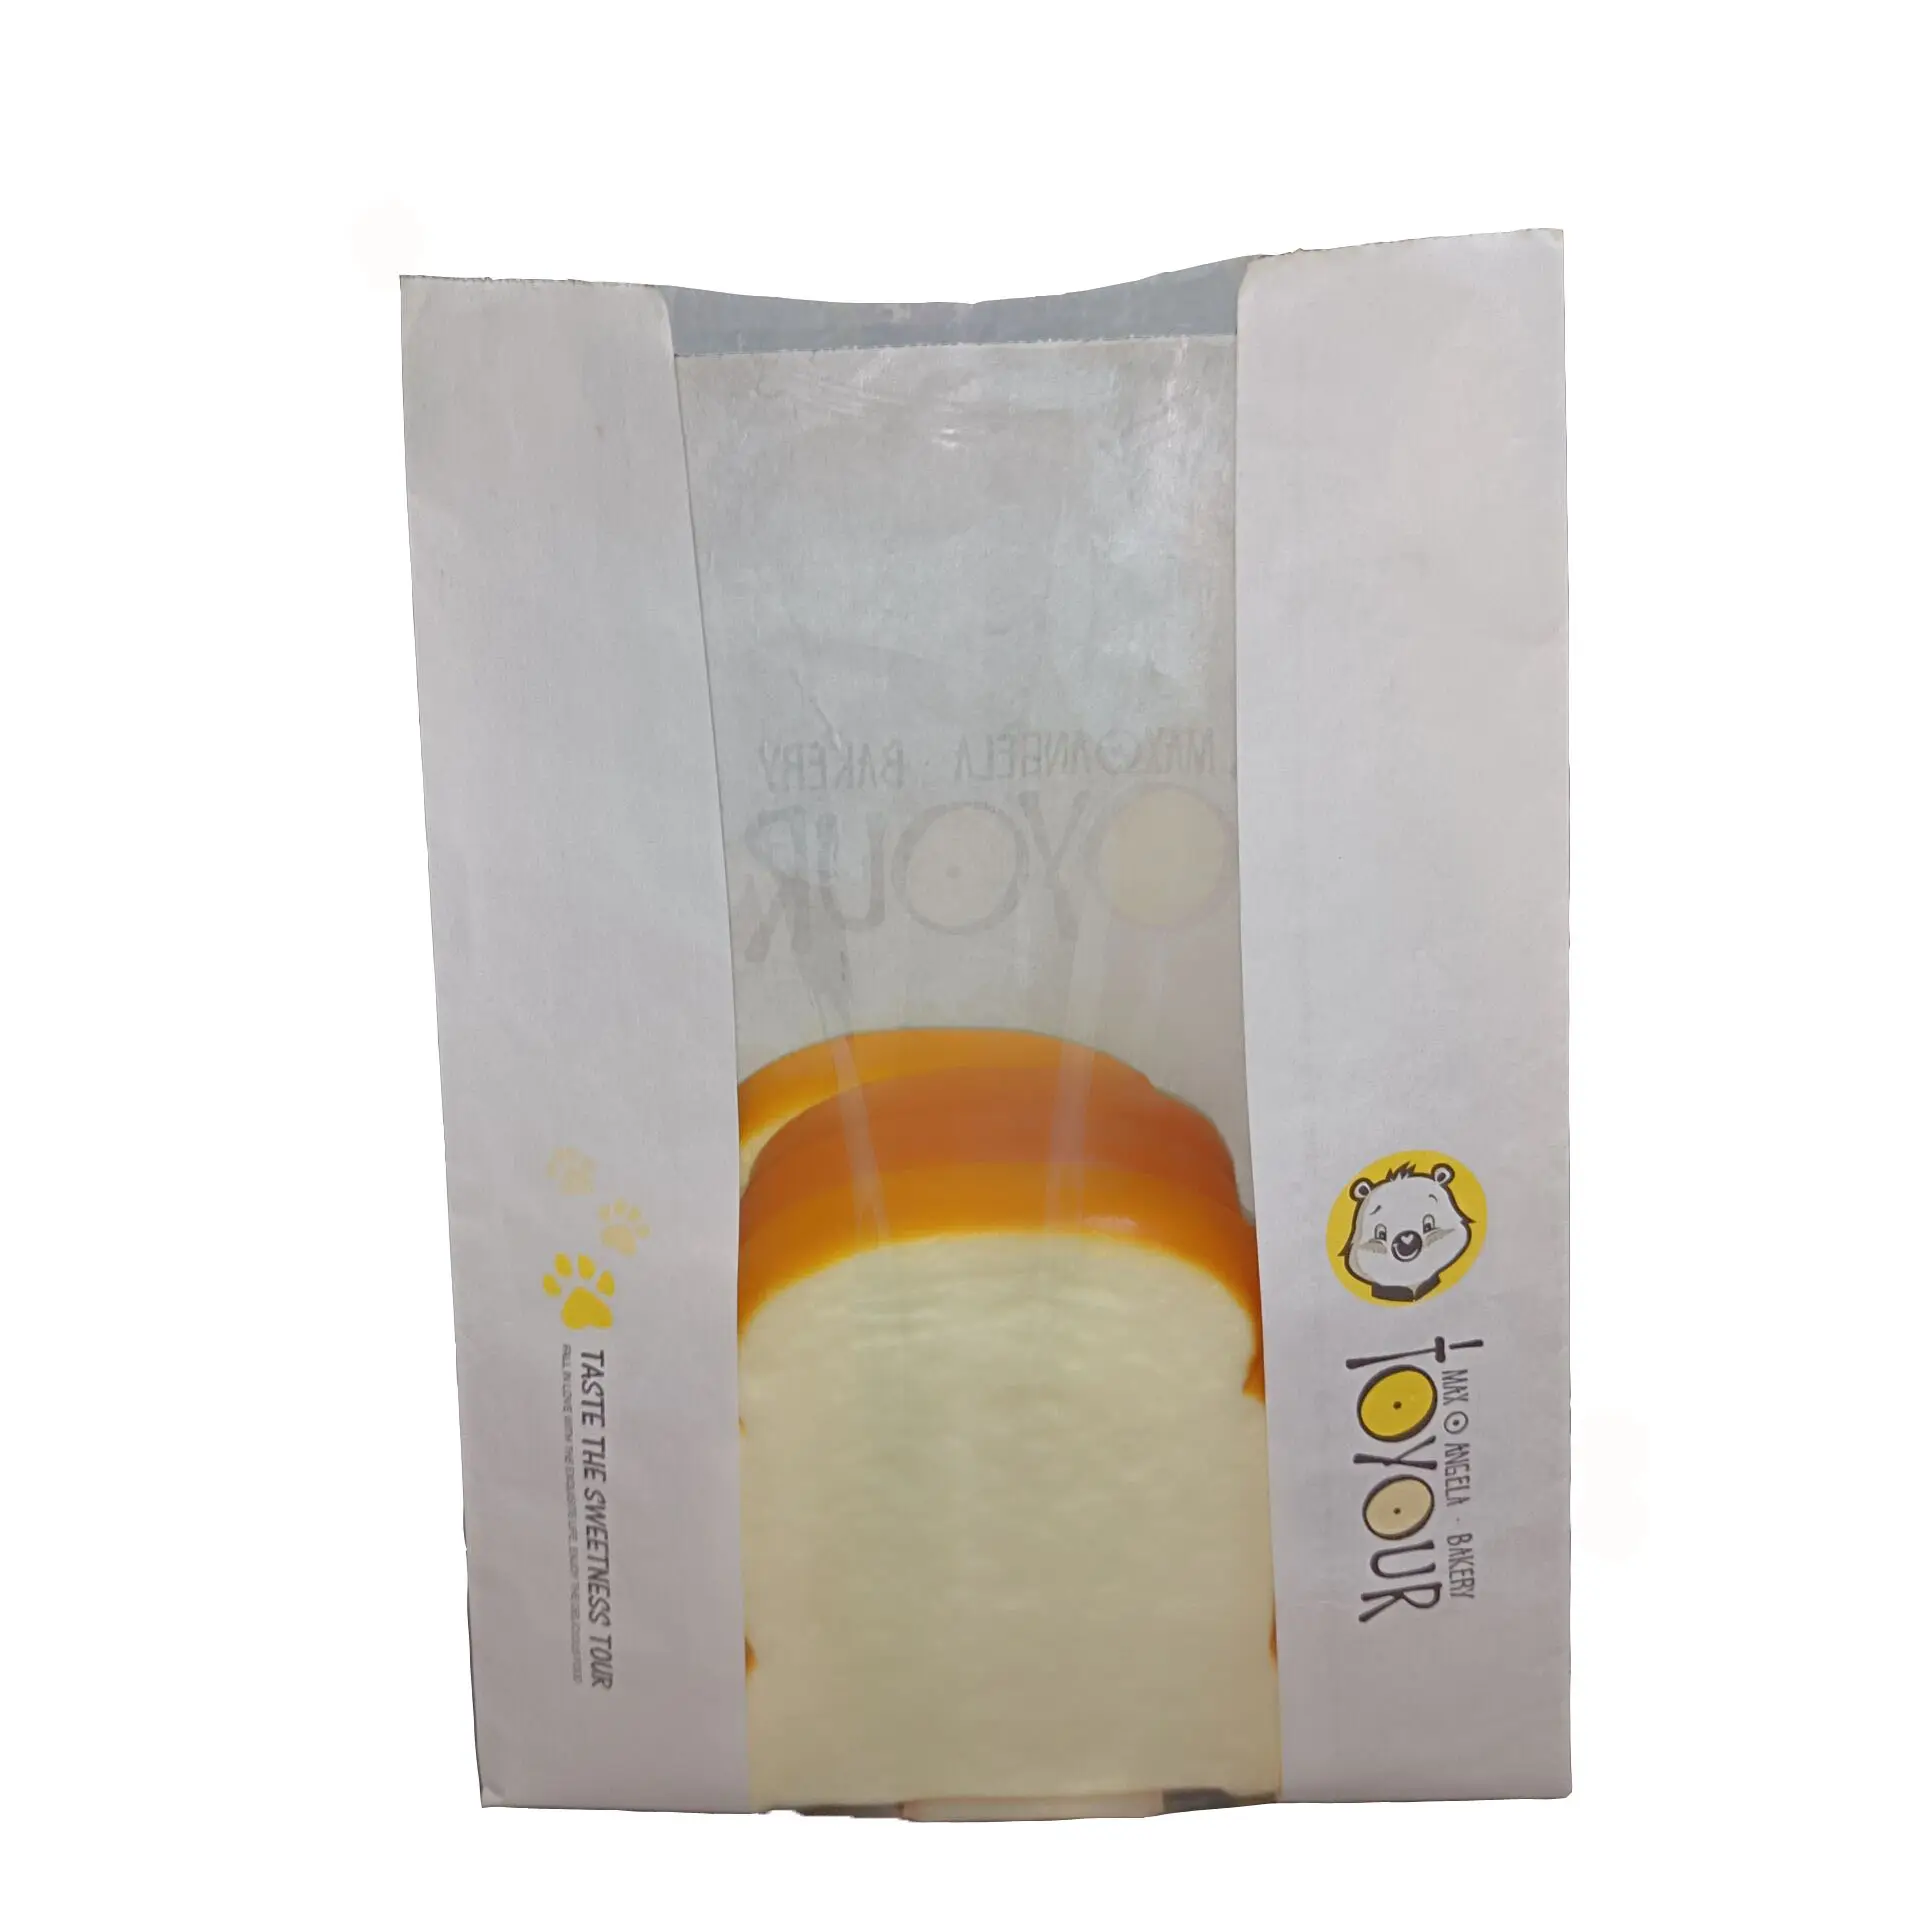 SP2479 masa de alta calidad desechable a prueba de grasa bolsa de papel tostado con ventana visual